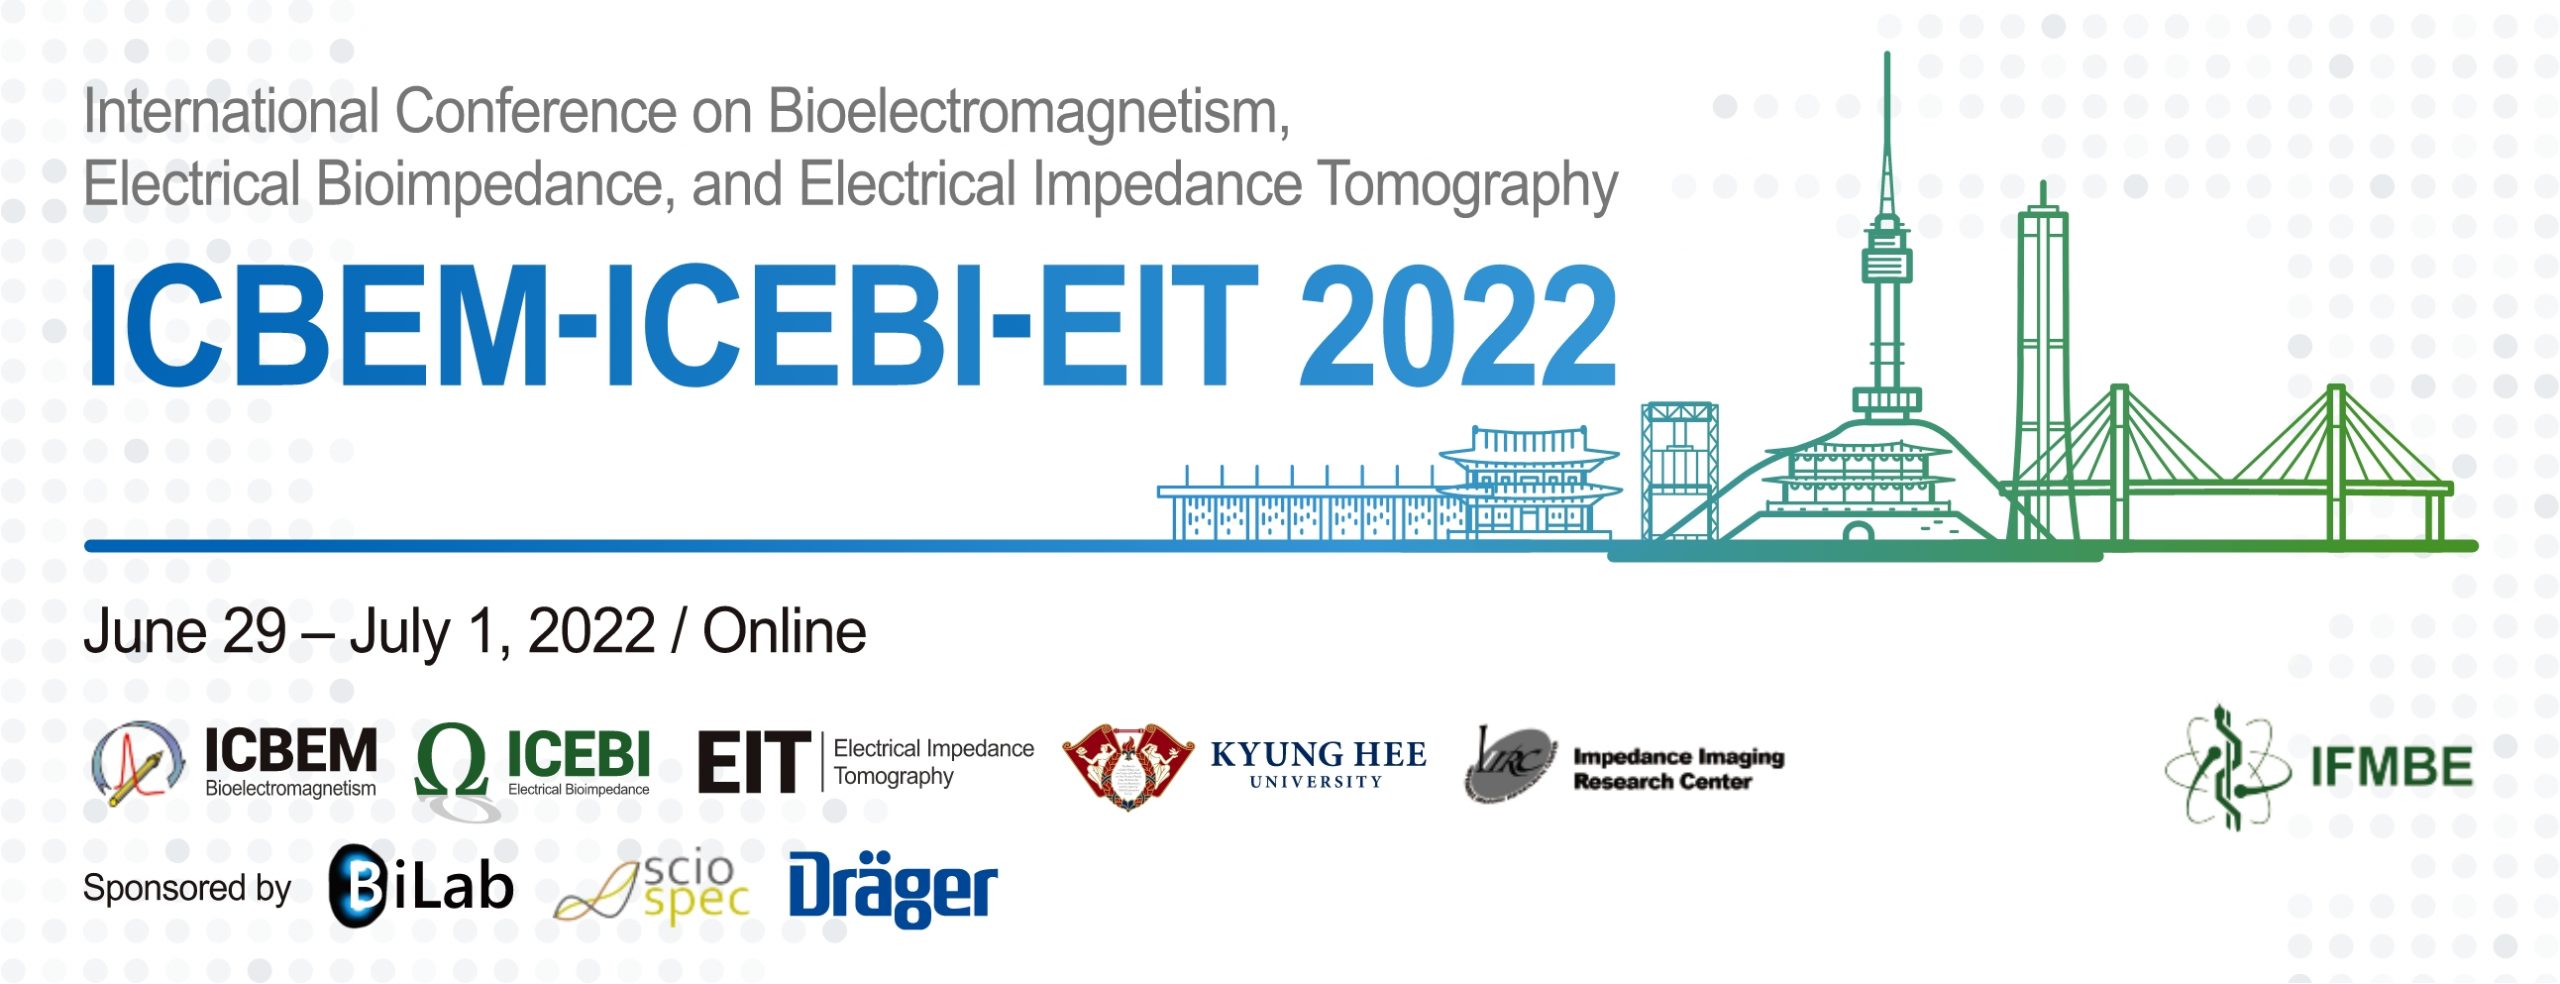 ICBEM-ICEBI-EIT 2022